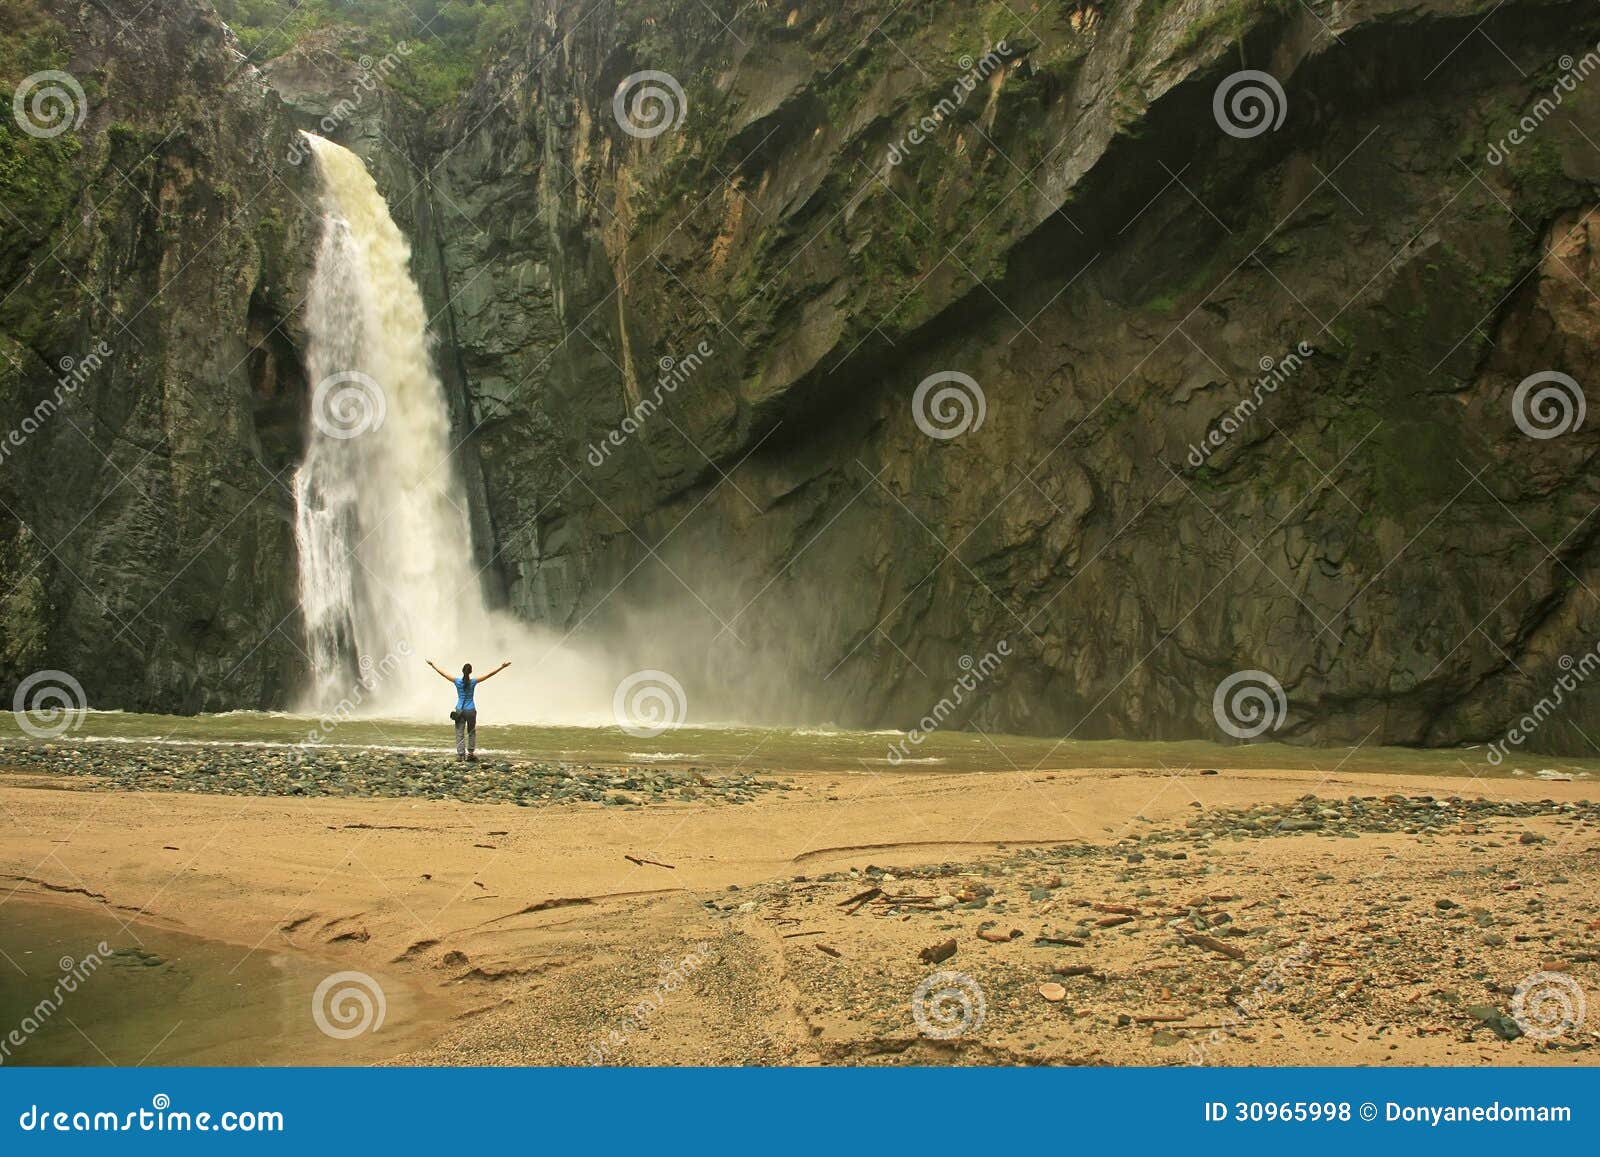 salto jimenoa uno waterfall, jarabacoa